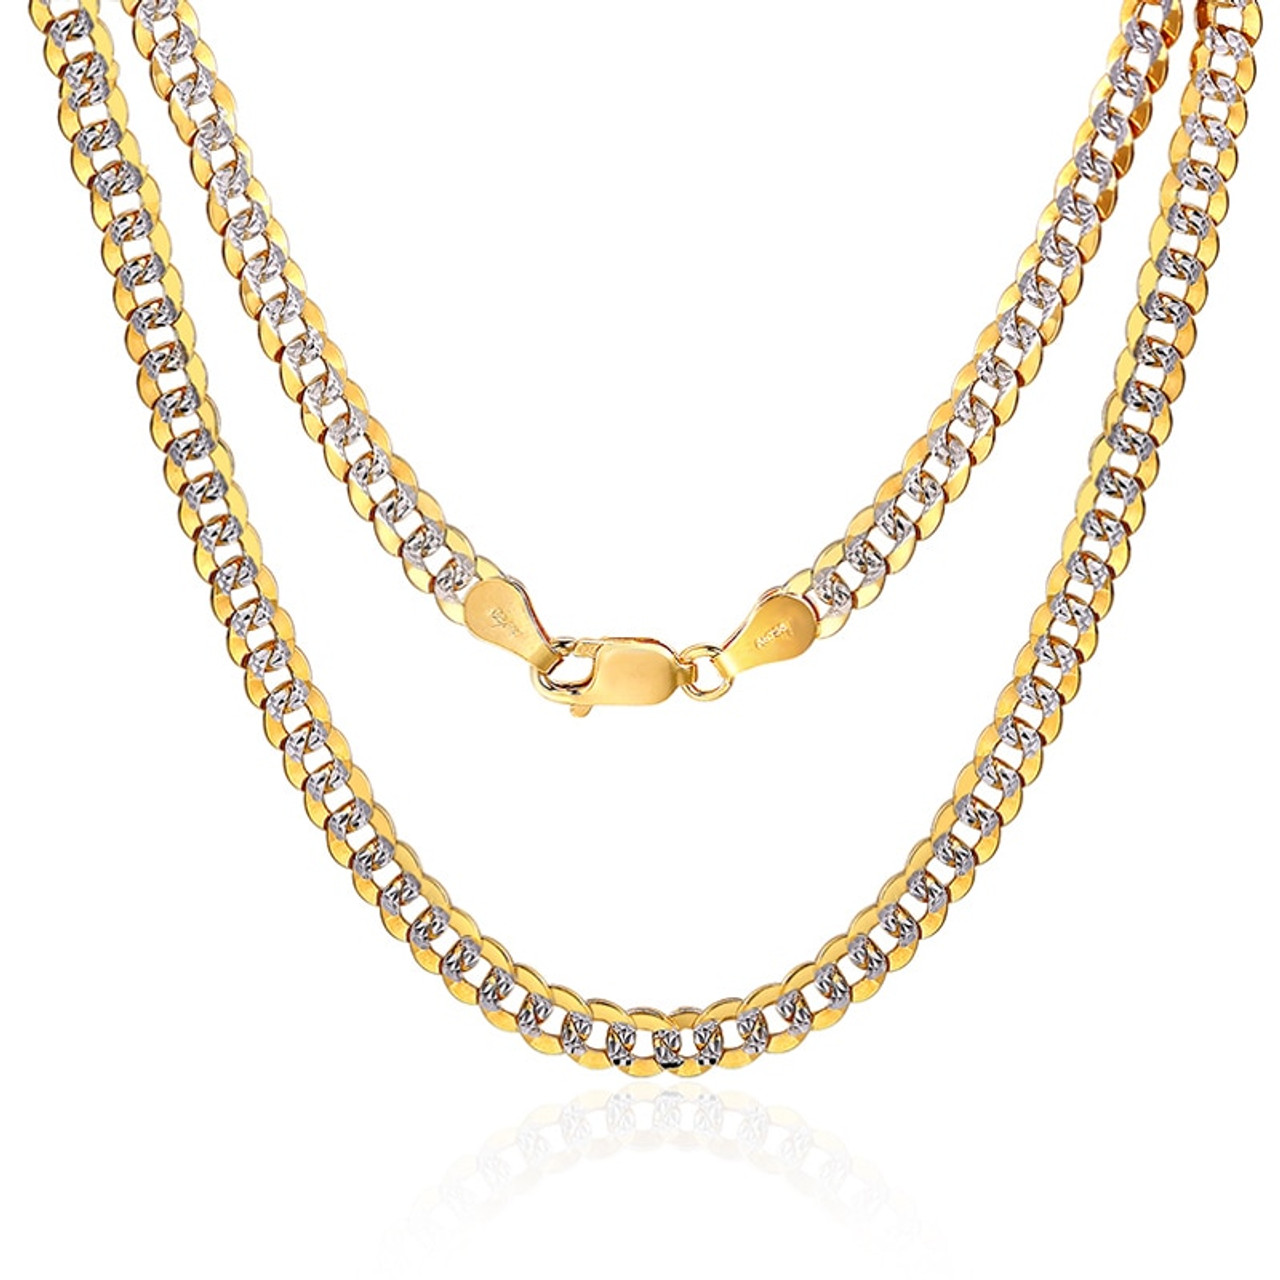 2.2-6mm Stainless Steel 18k Gold Plated Flat Snake Chain Necklace Women Men  | eBay